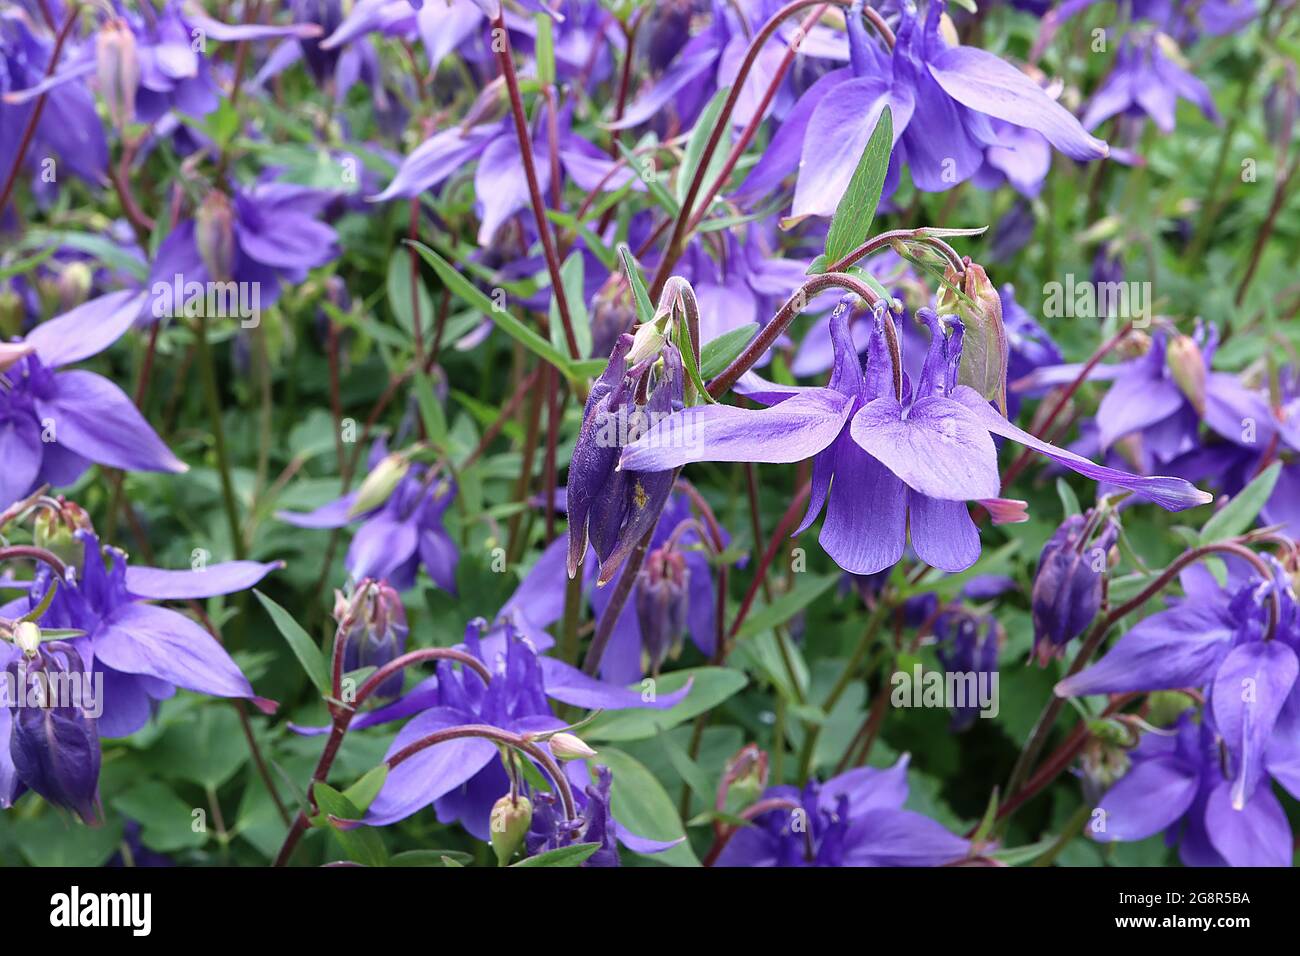 Aquilegia alpina alpine columbine – pendulous bell-shaped purple blue flowers, flared sepals, short curved spurs,  May, England, UK Stock Photo